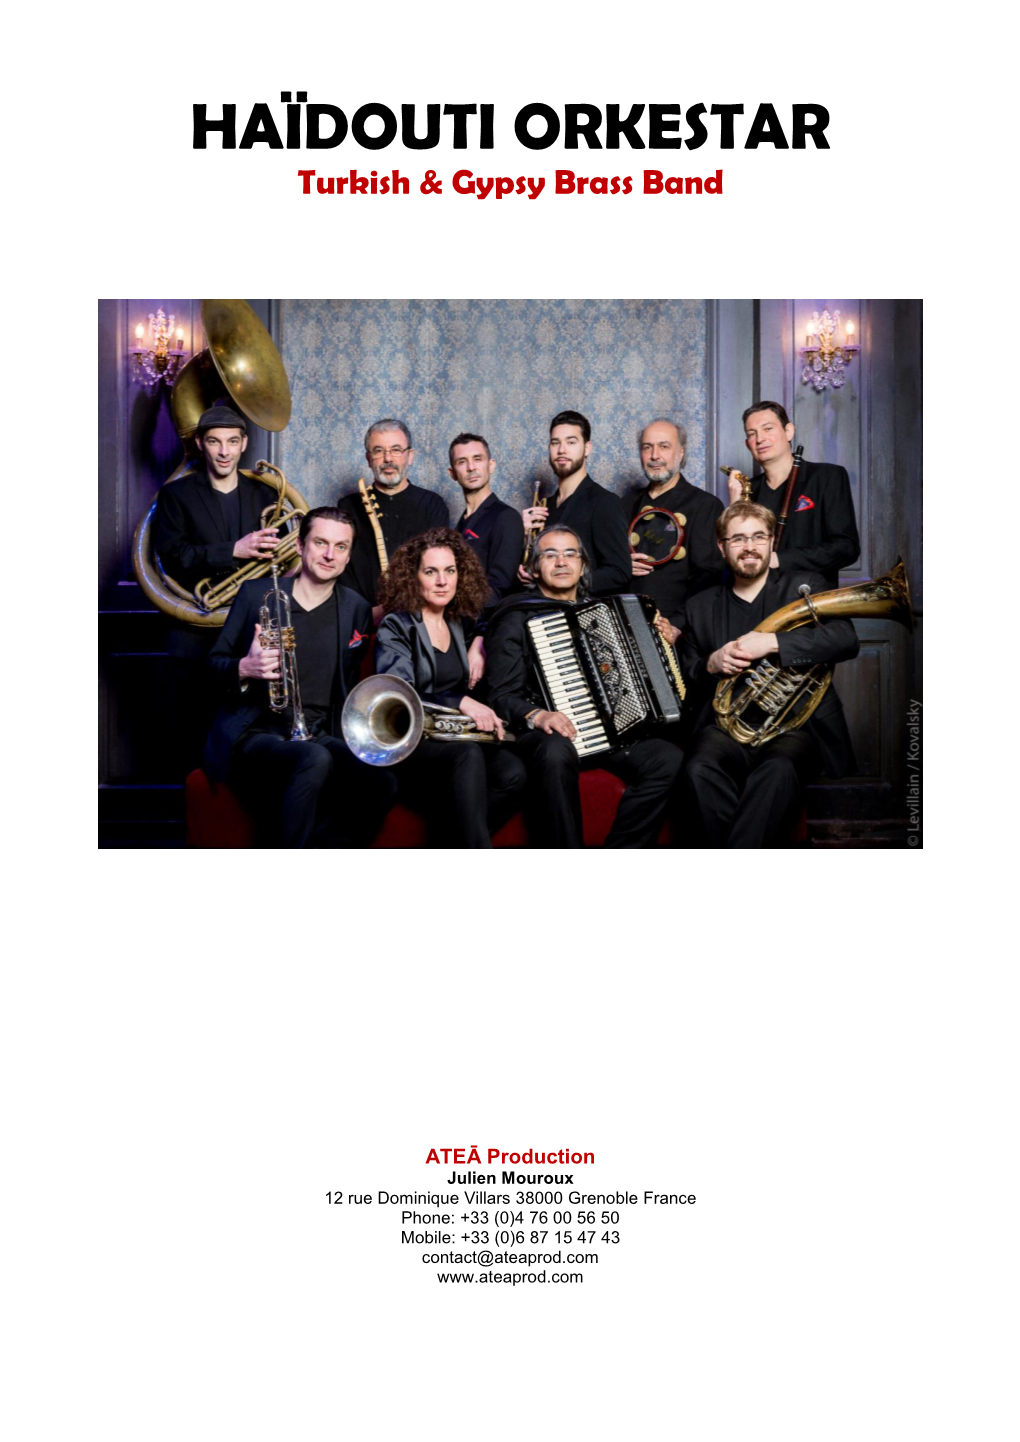 HAÏDOUTI ORKESTAR Turkish & Gypsy Brass Band